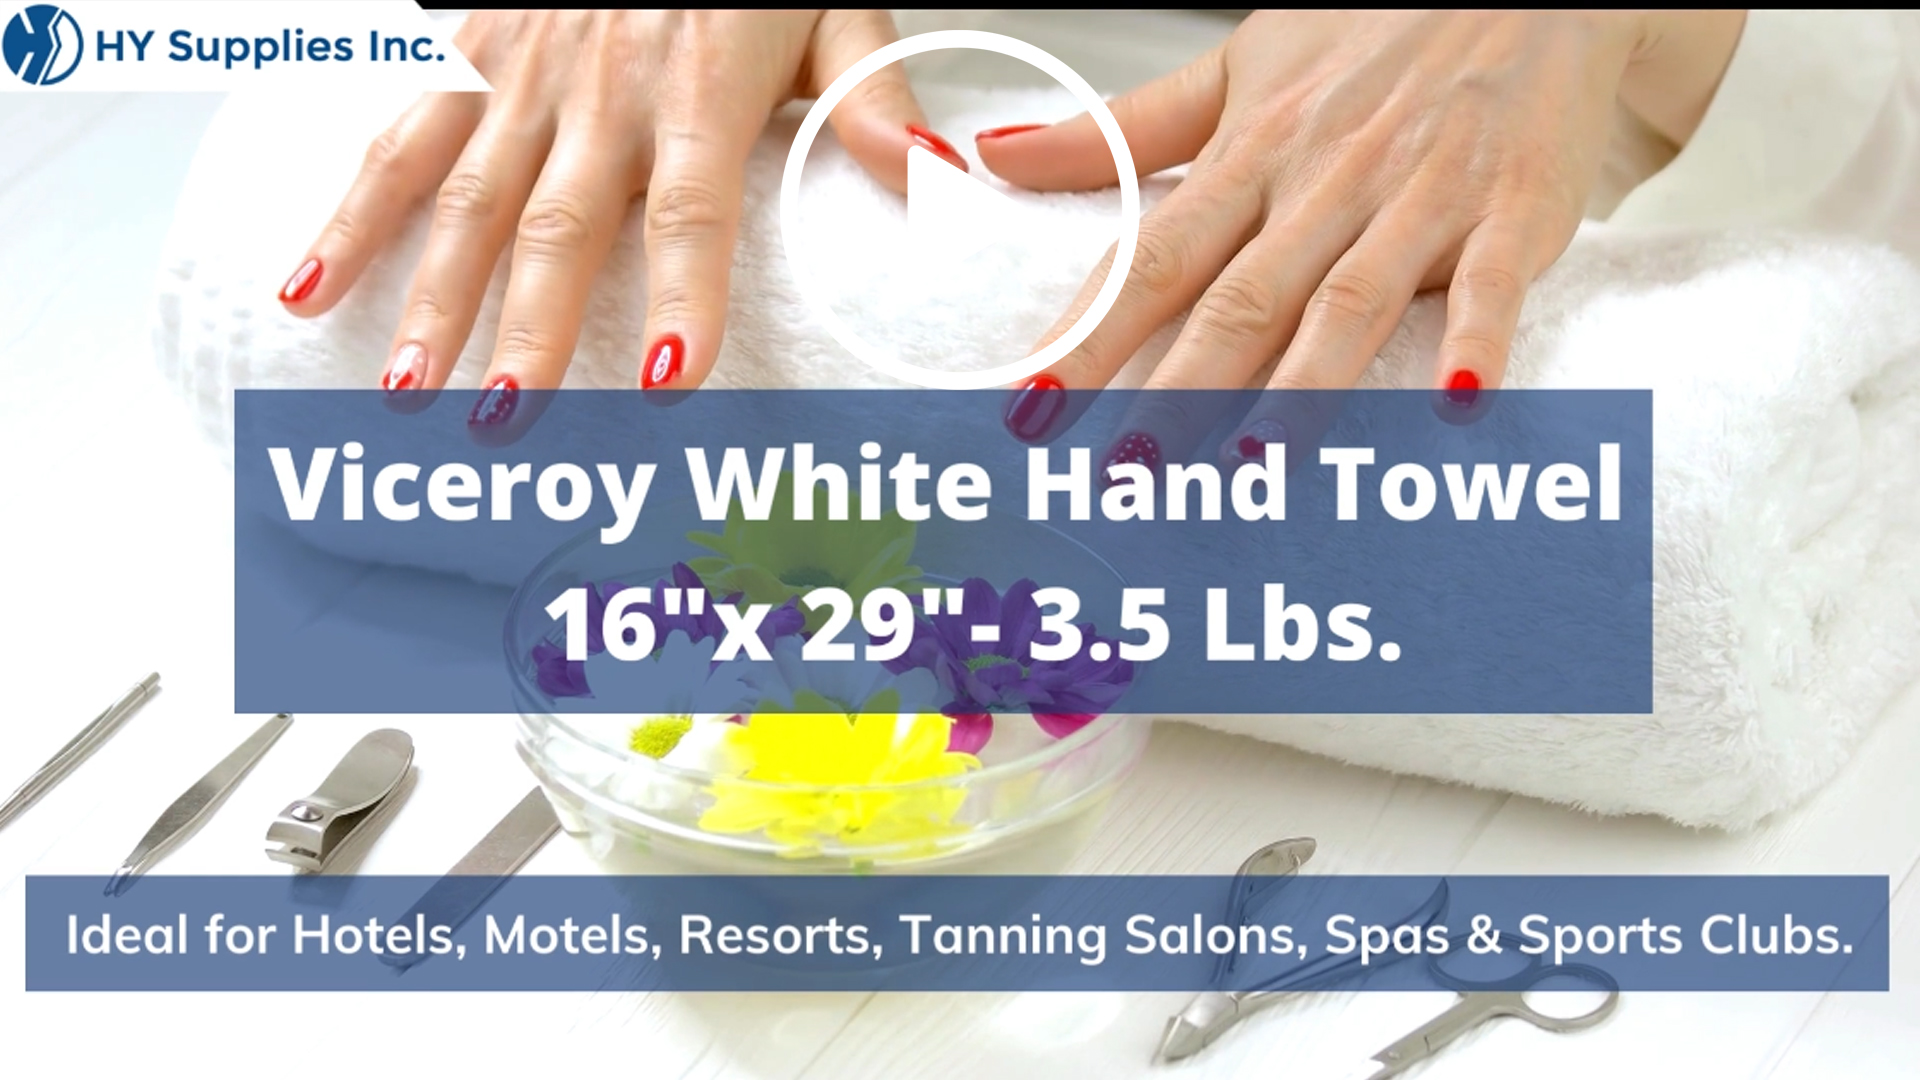 Viceroy White Hand Towel - 16"x 29"- 3.5 Lbs.